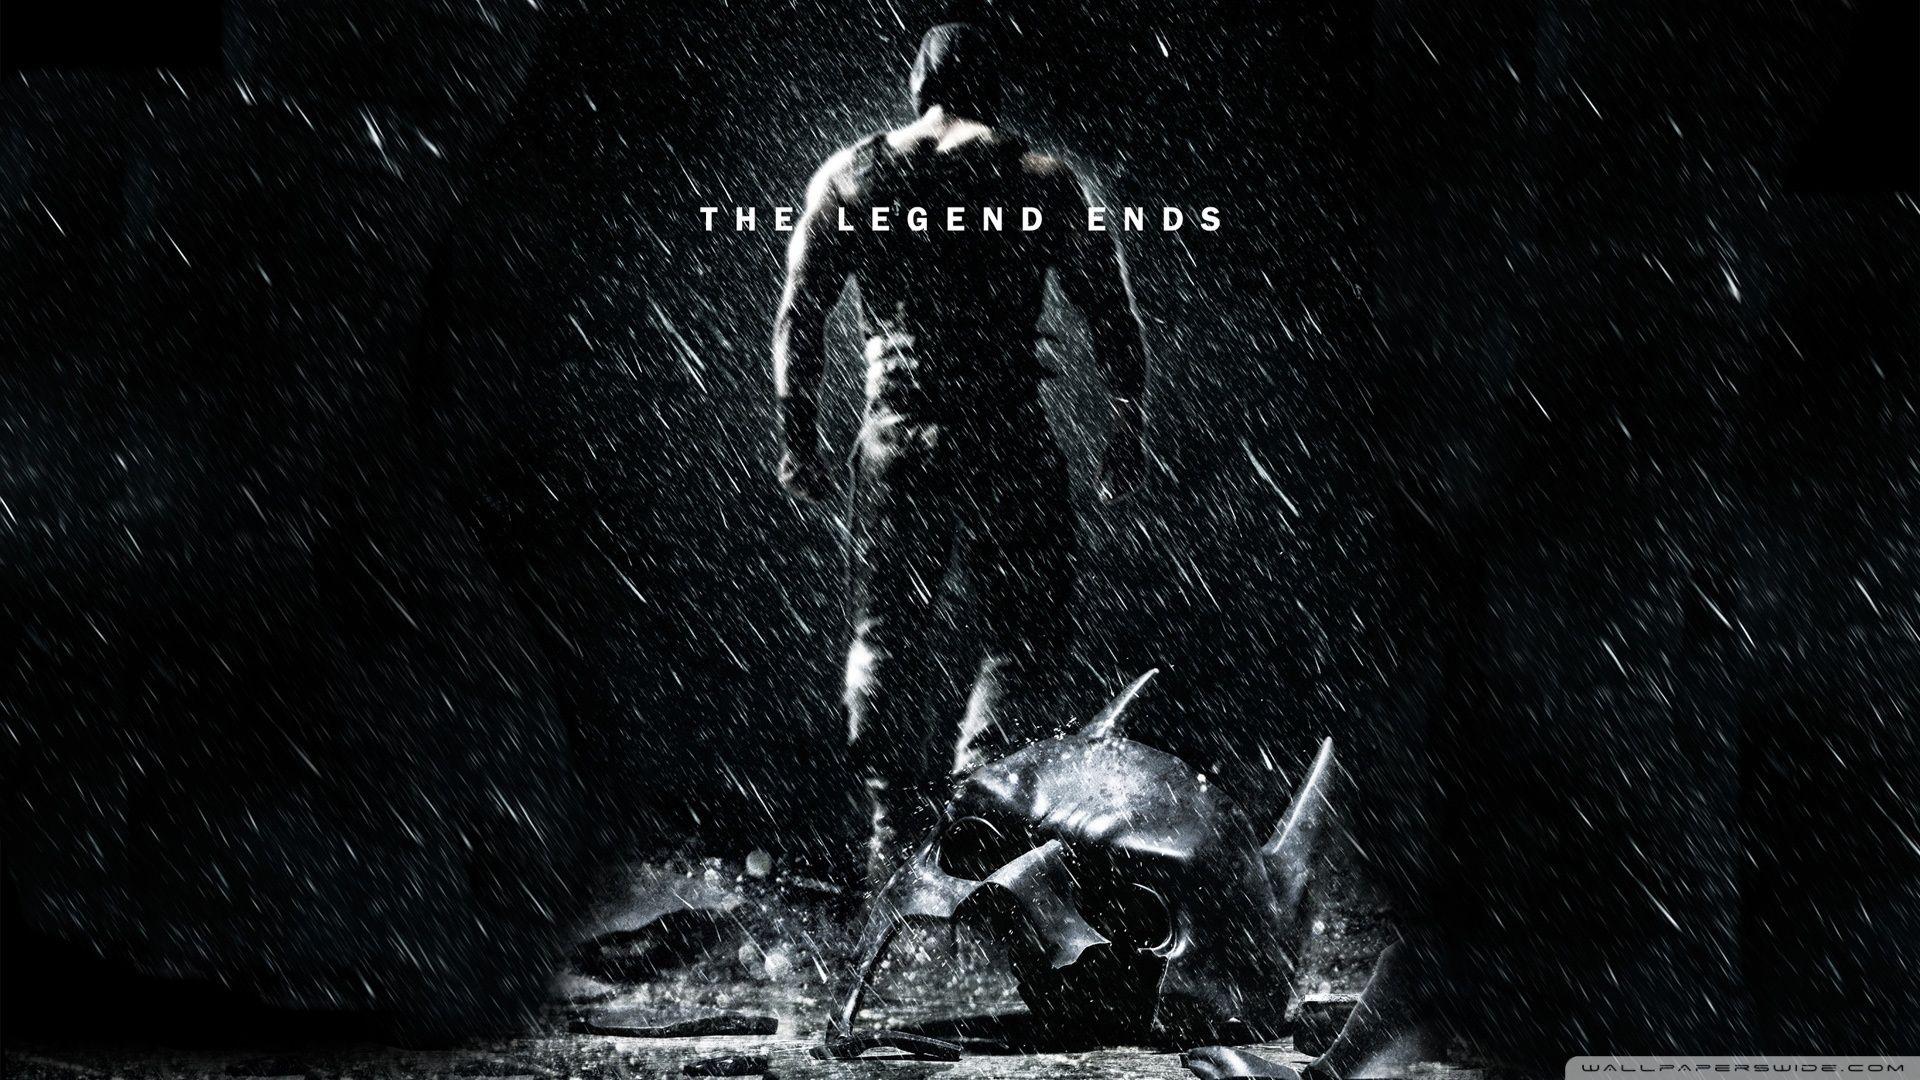 Batman The Dark Knight Rises Wallpapers - Top Free Batman ...